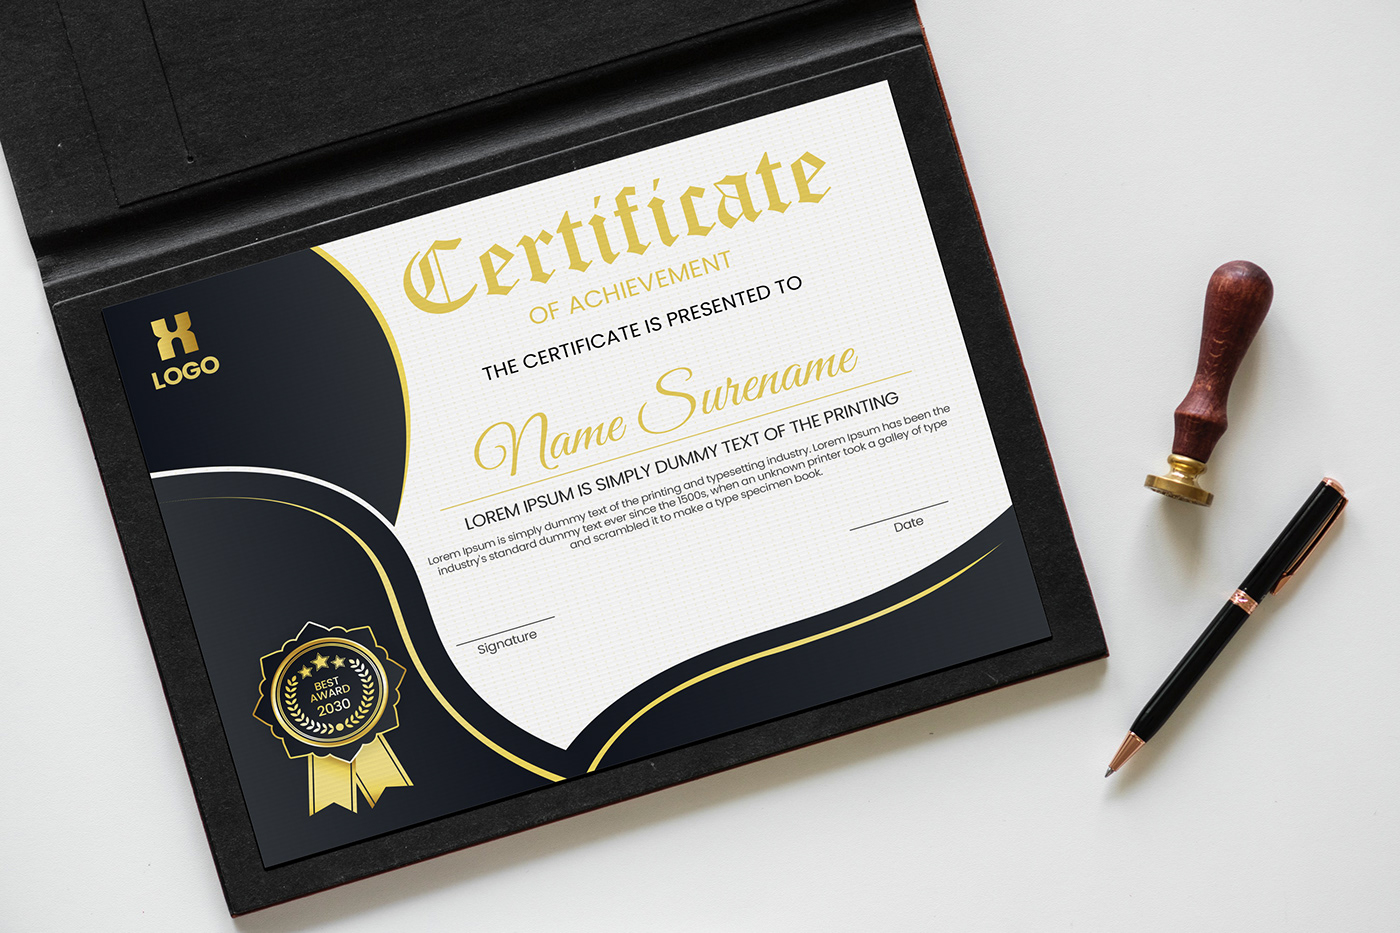 certificate diploma award certificate template Appreciation achievement certification Education learning University